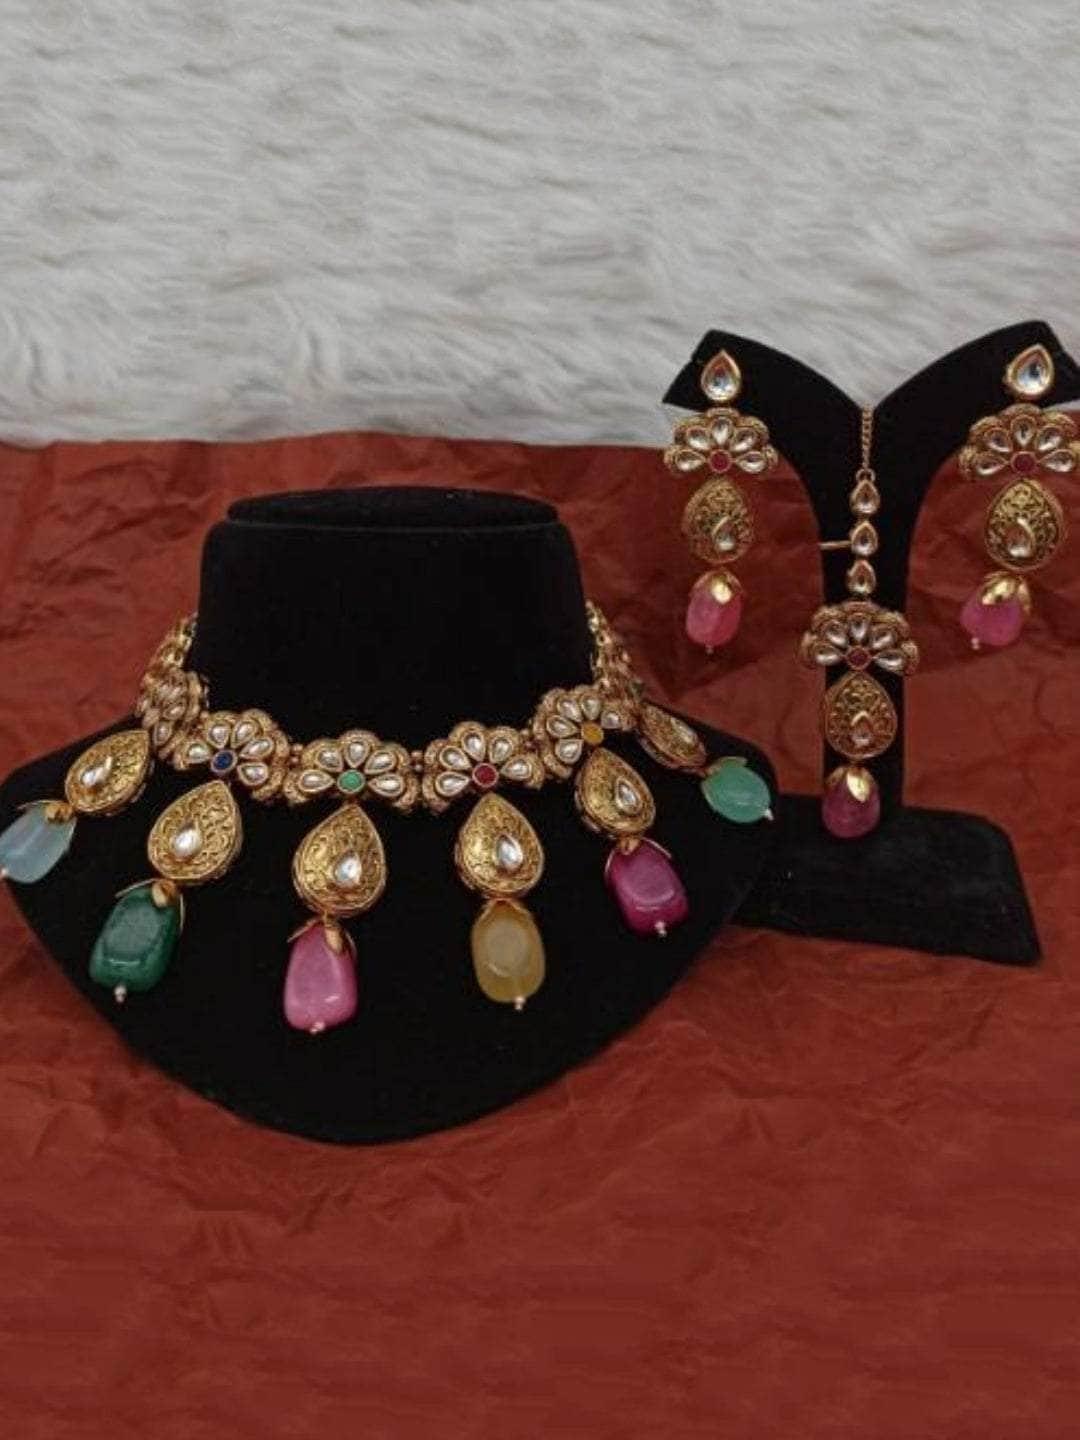 Ishhaara Half Flower Antique Drop Necklace Earring And Teeka Set